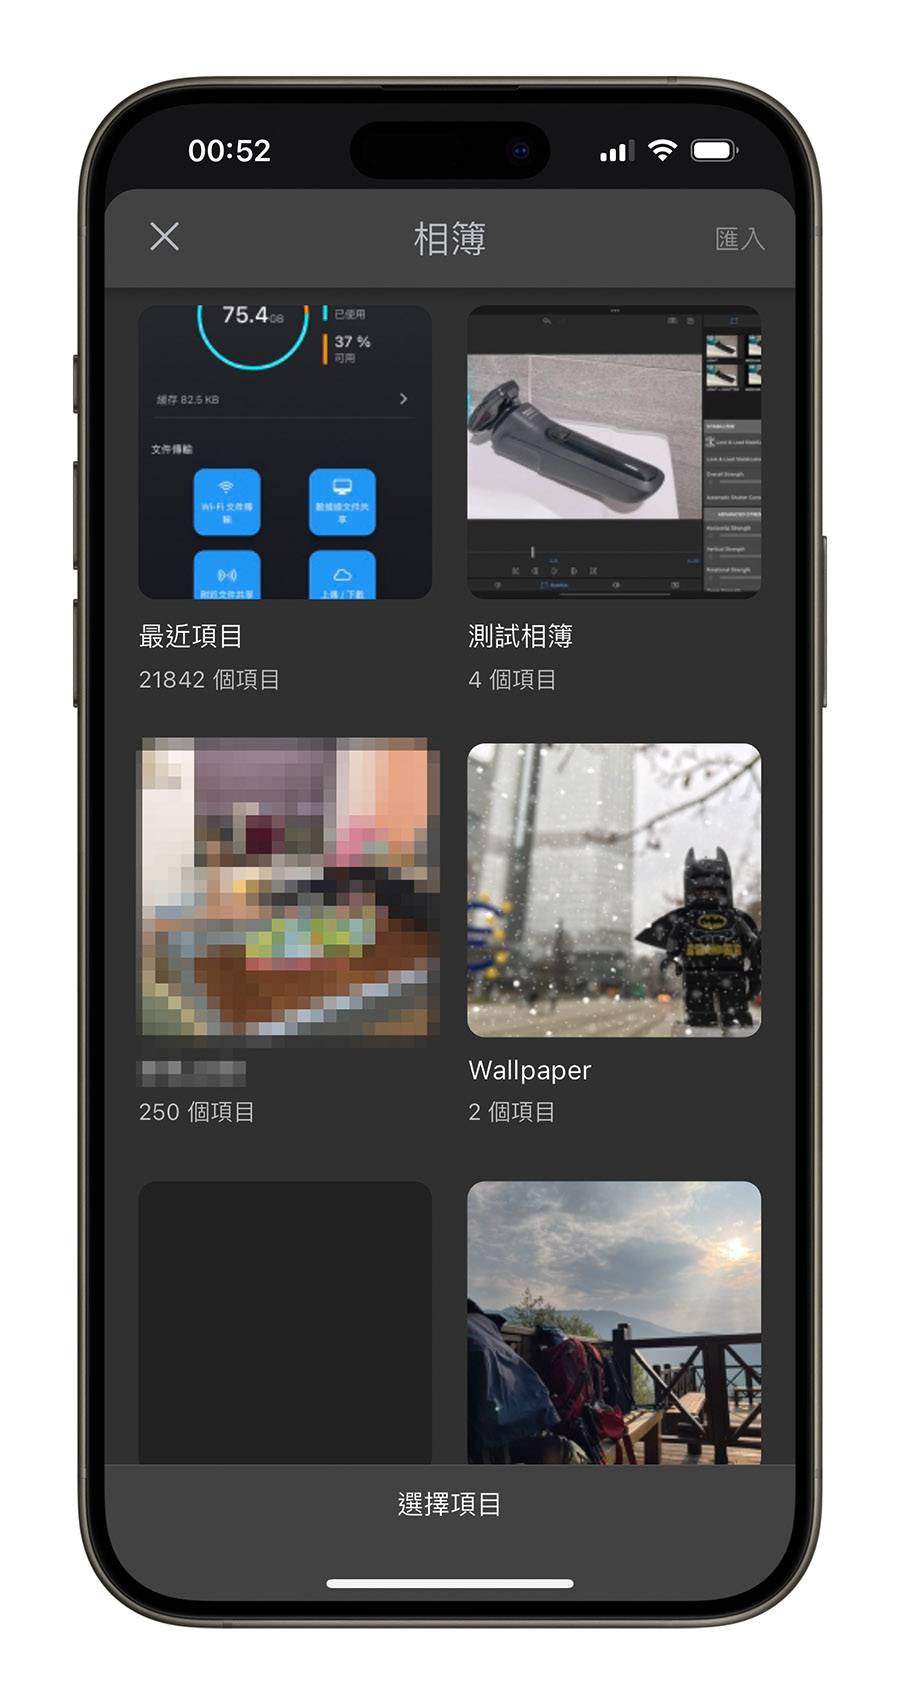 iPhone PC 传照片 App